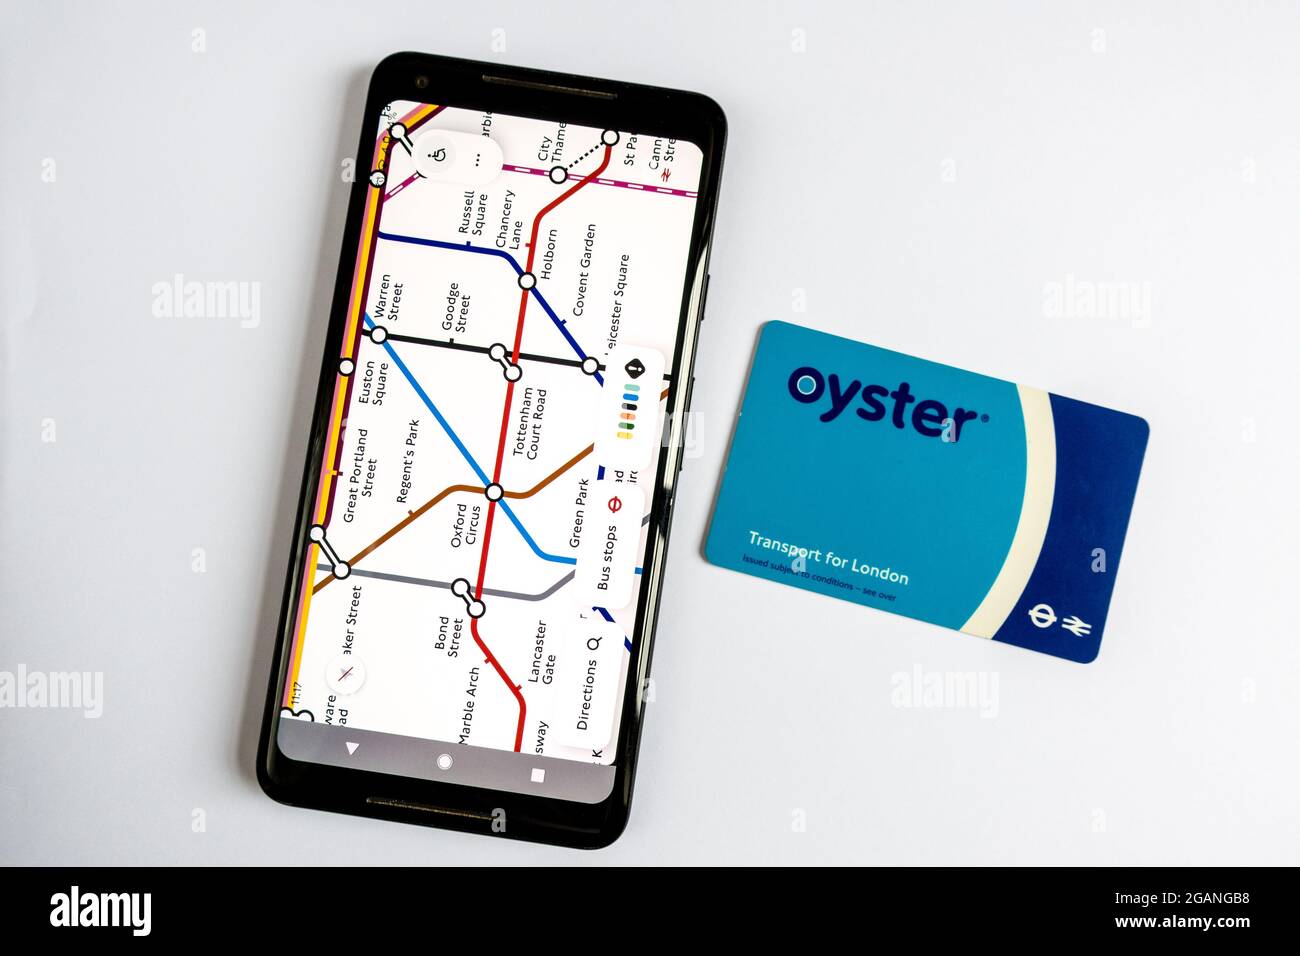 Mapa del metro en el smartphone y tarjeta Oyster La tarjeta de viaje Transport for London Foto de stock